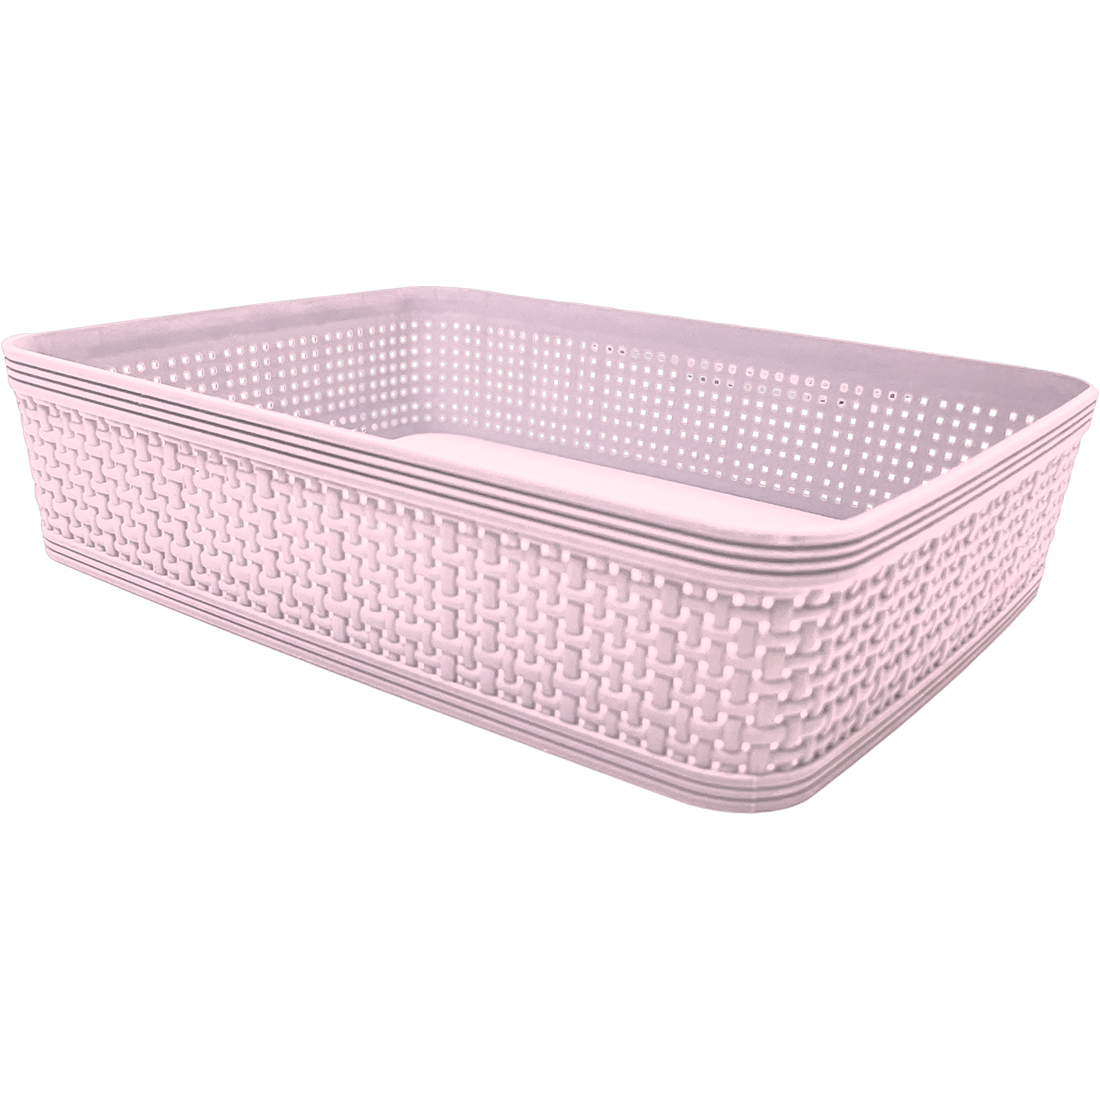 5 Pack Woven Plastic Storage Basket - Pink